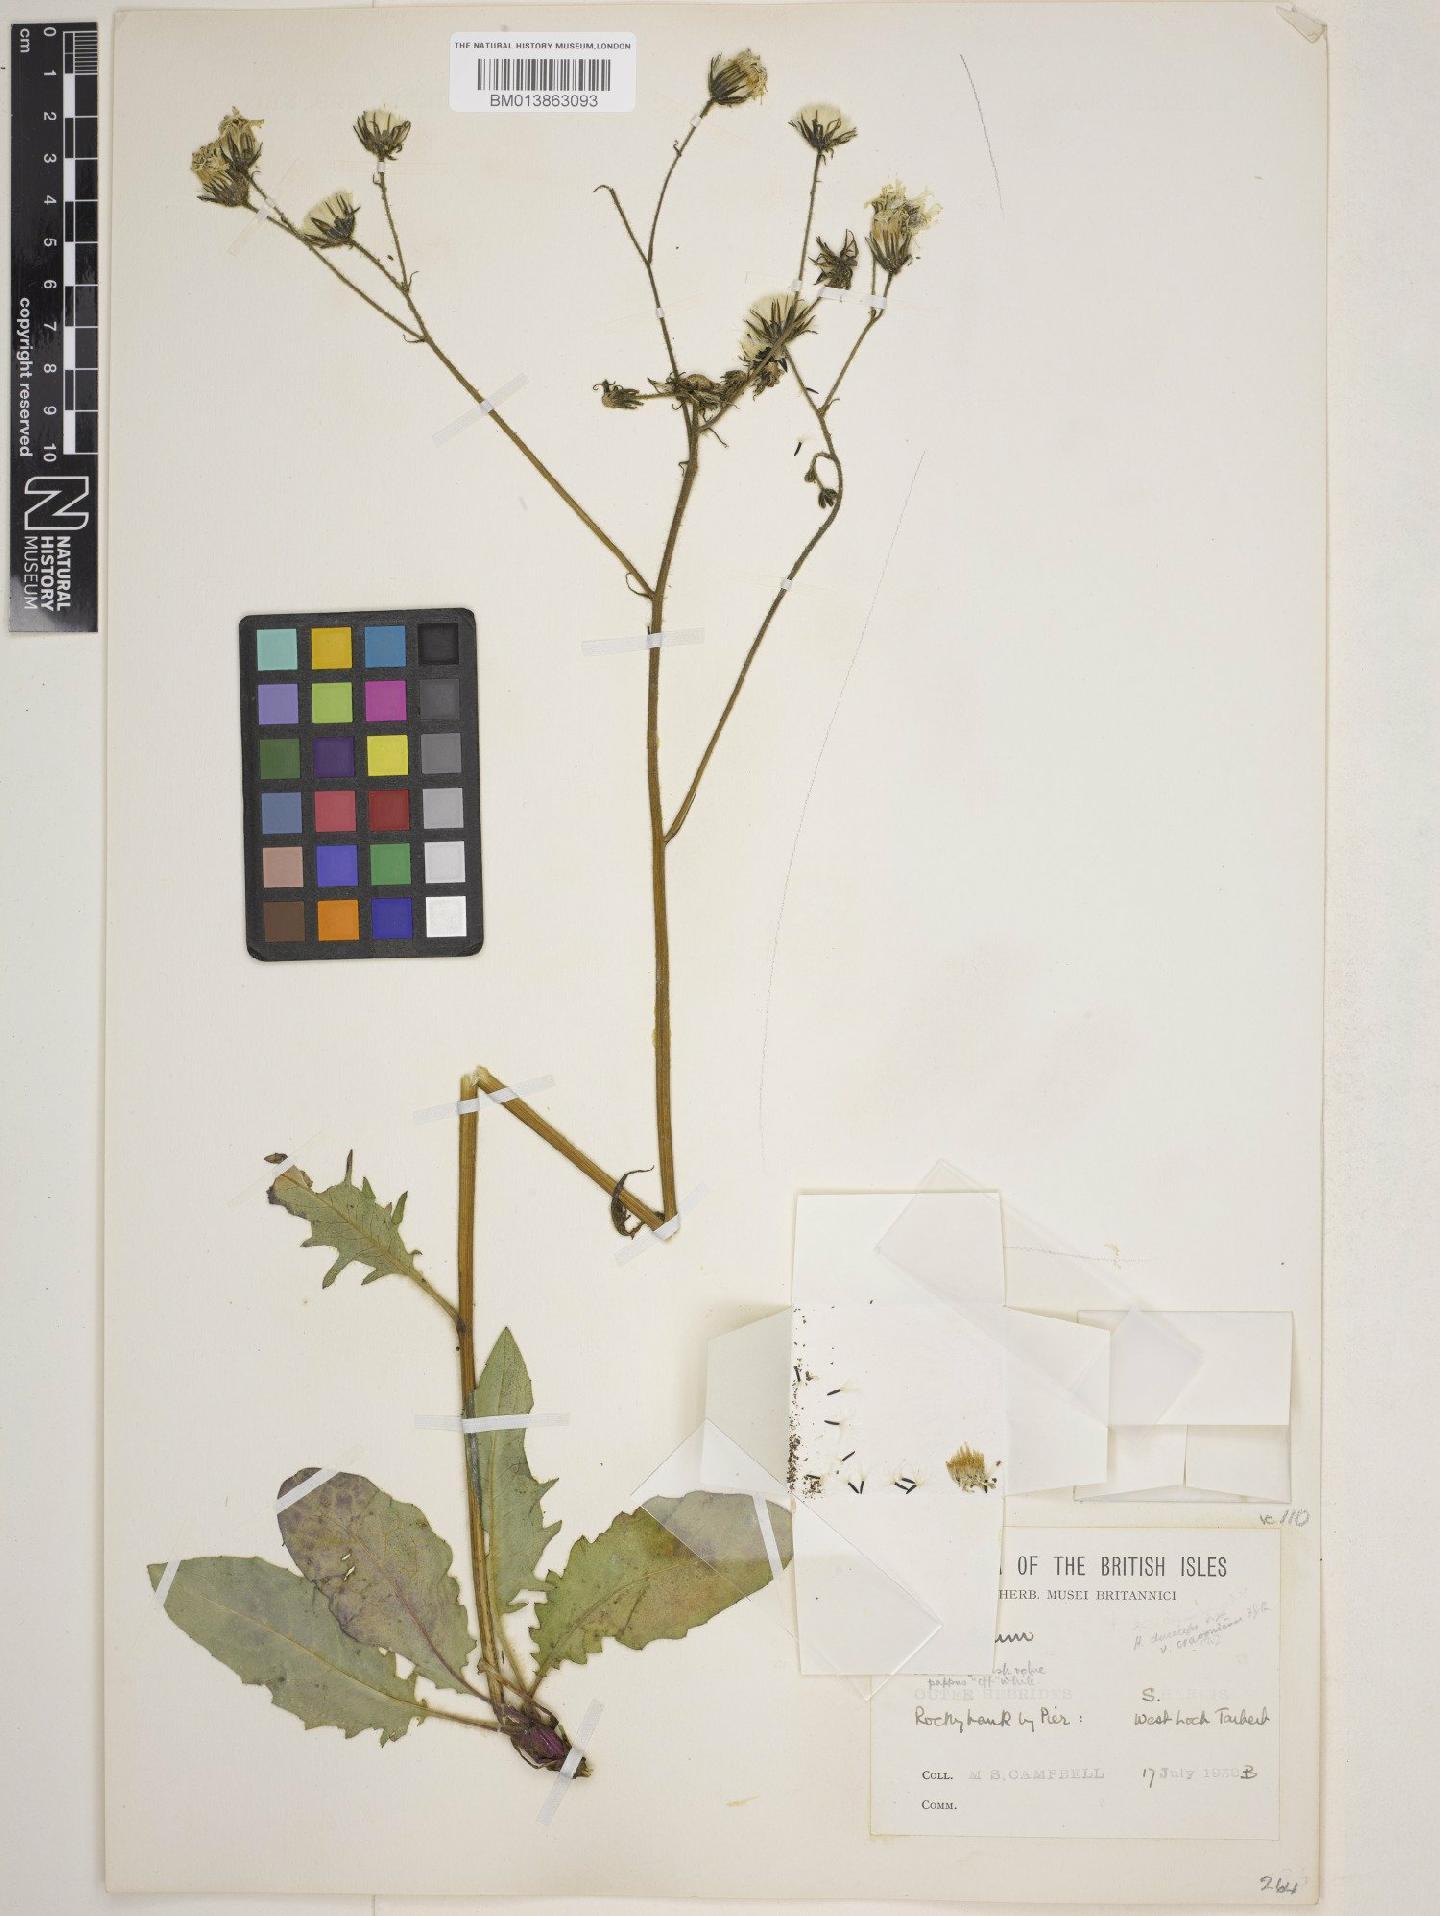 To NHMUK collection (Hieracium cravoniense (F.Hanb.) Roffey; NHMUK:ecatalogue:10178753)